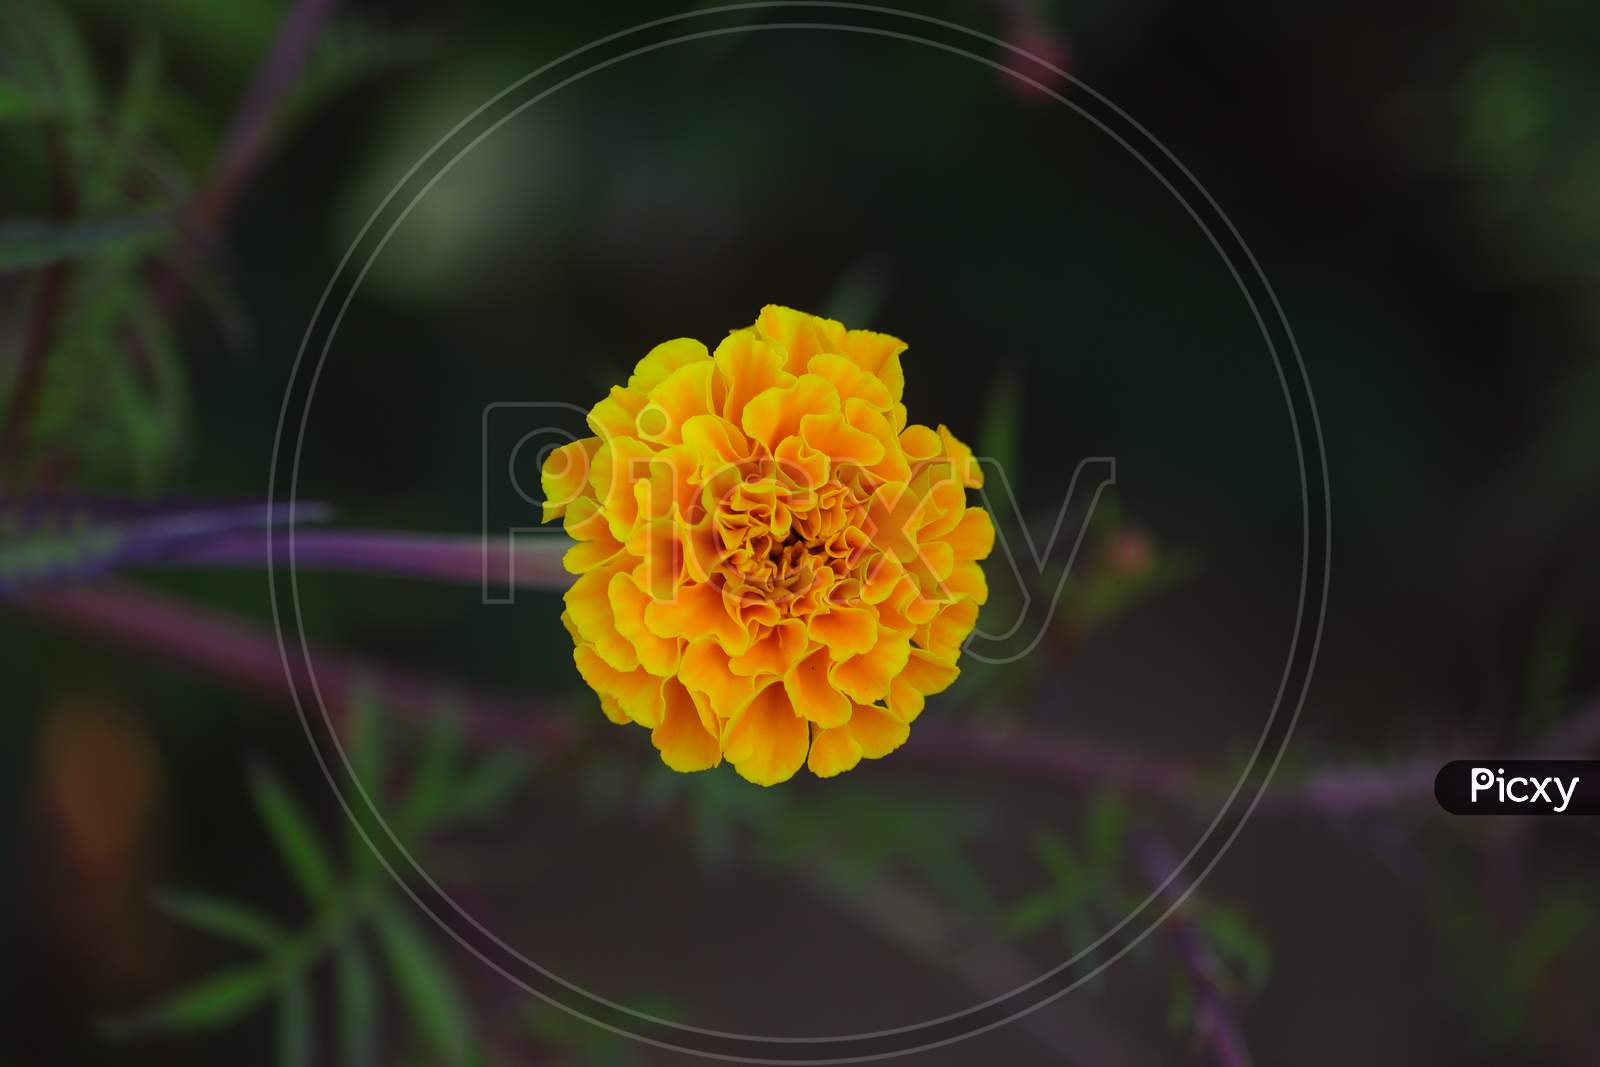 Marigold Flower Image, Hd